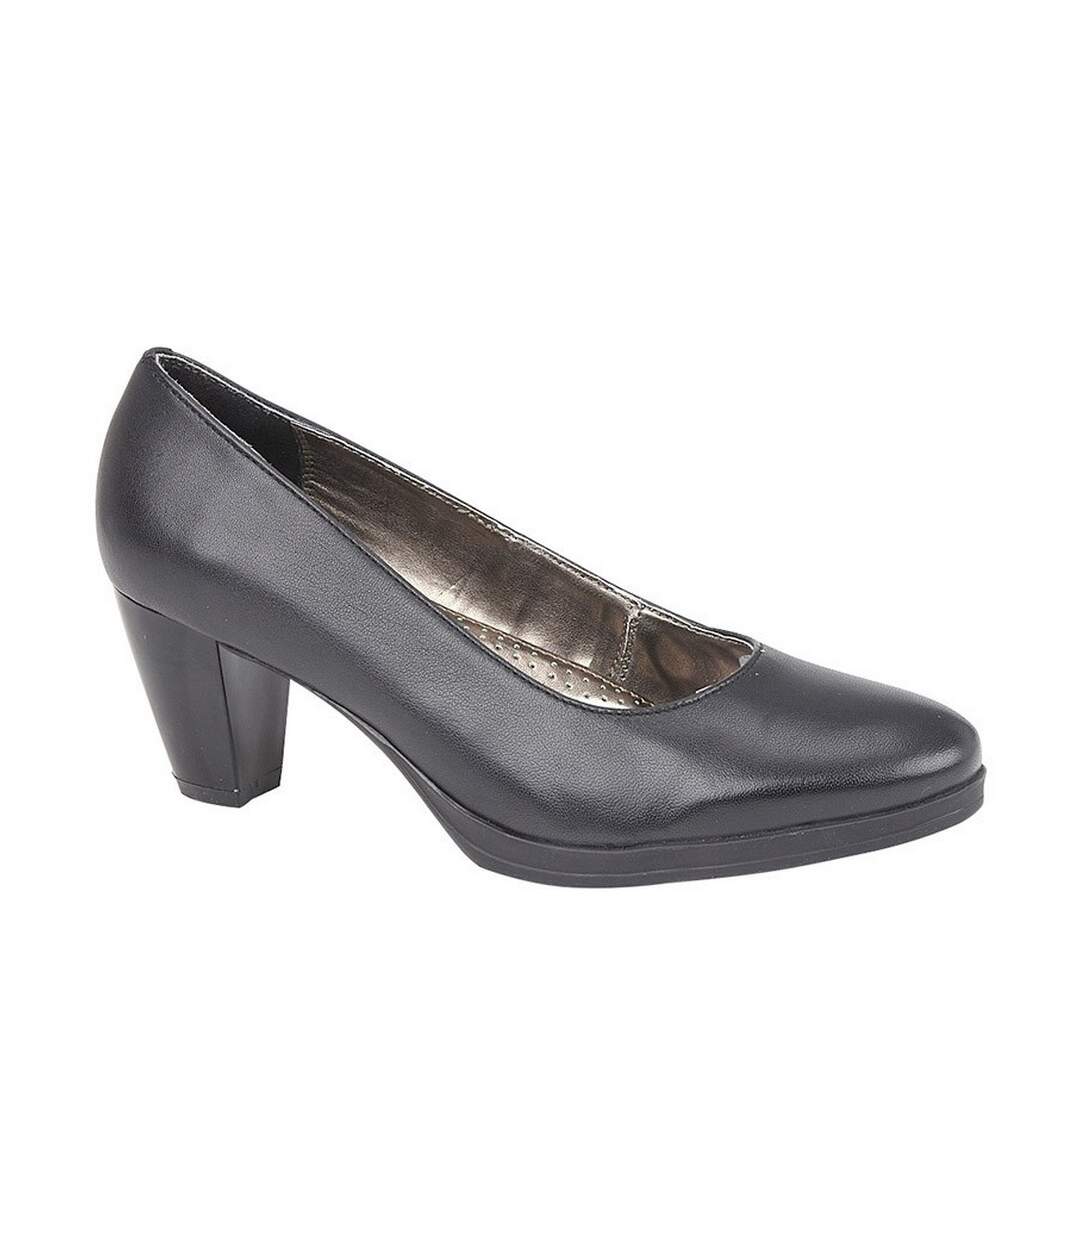 Mod Comfys Womens/Ladies Plain Leather Heel Court Shoes (Black) - UTDF1892